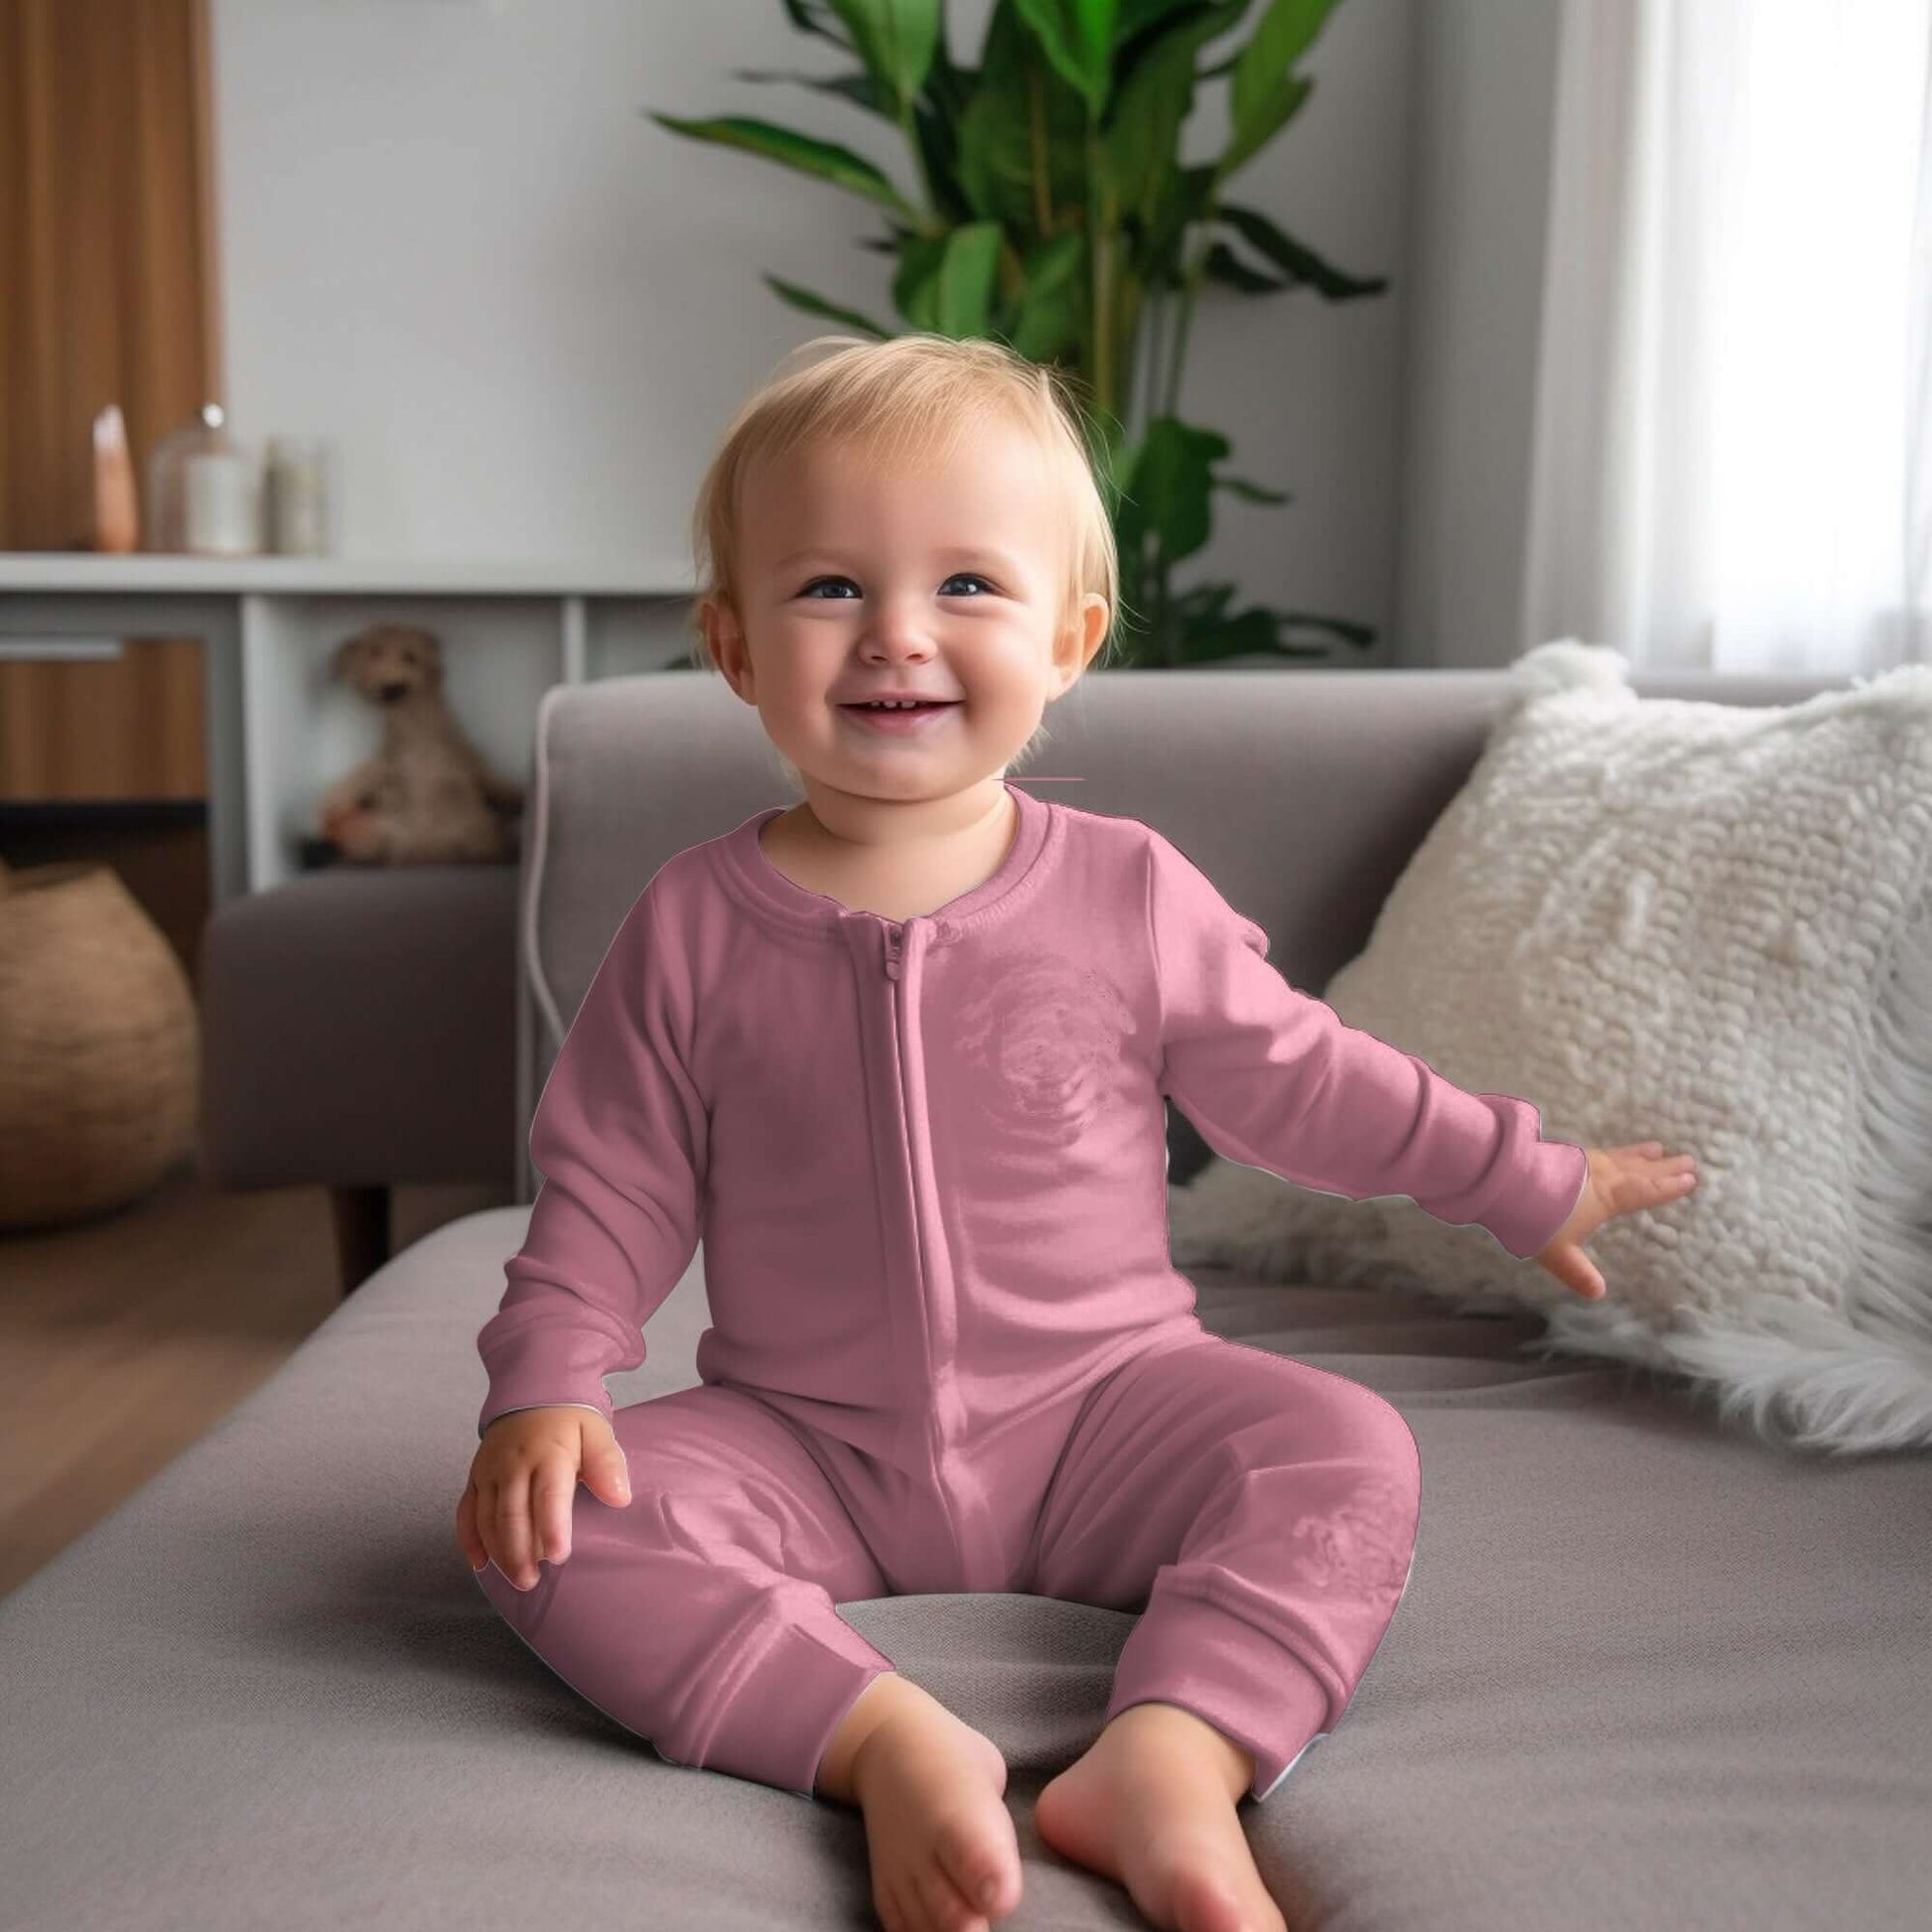 Basic Zippie Pajamas - On Wednesdays We Wear Pink BOGO Bamboo Zippies 24 WrenIvyCo